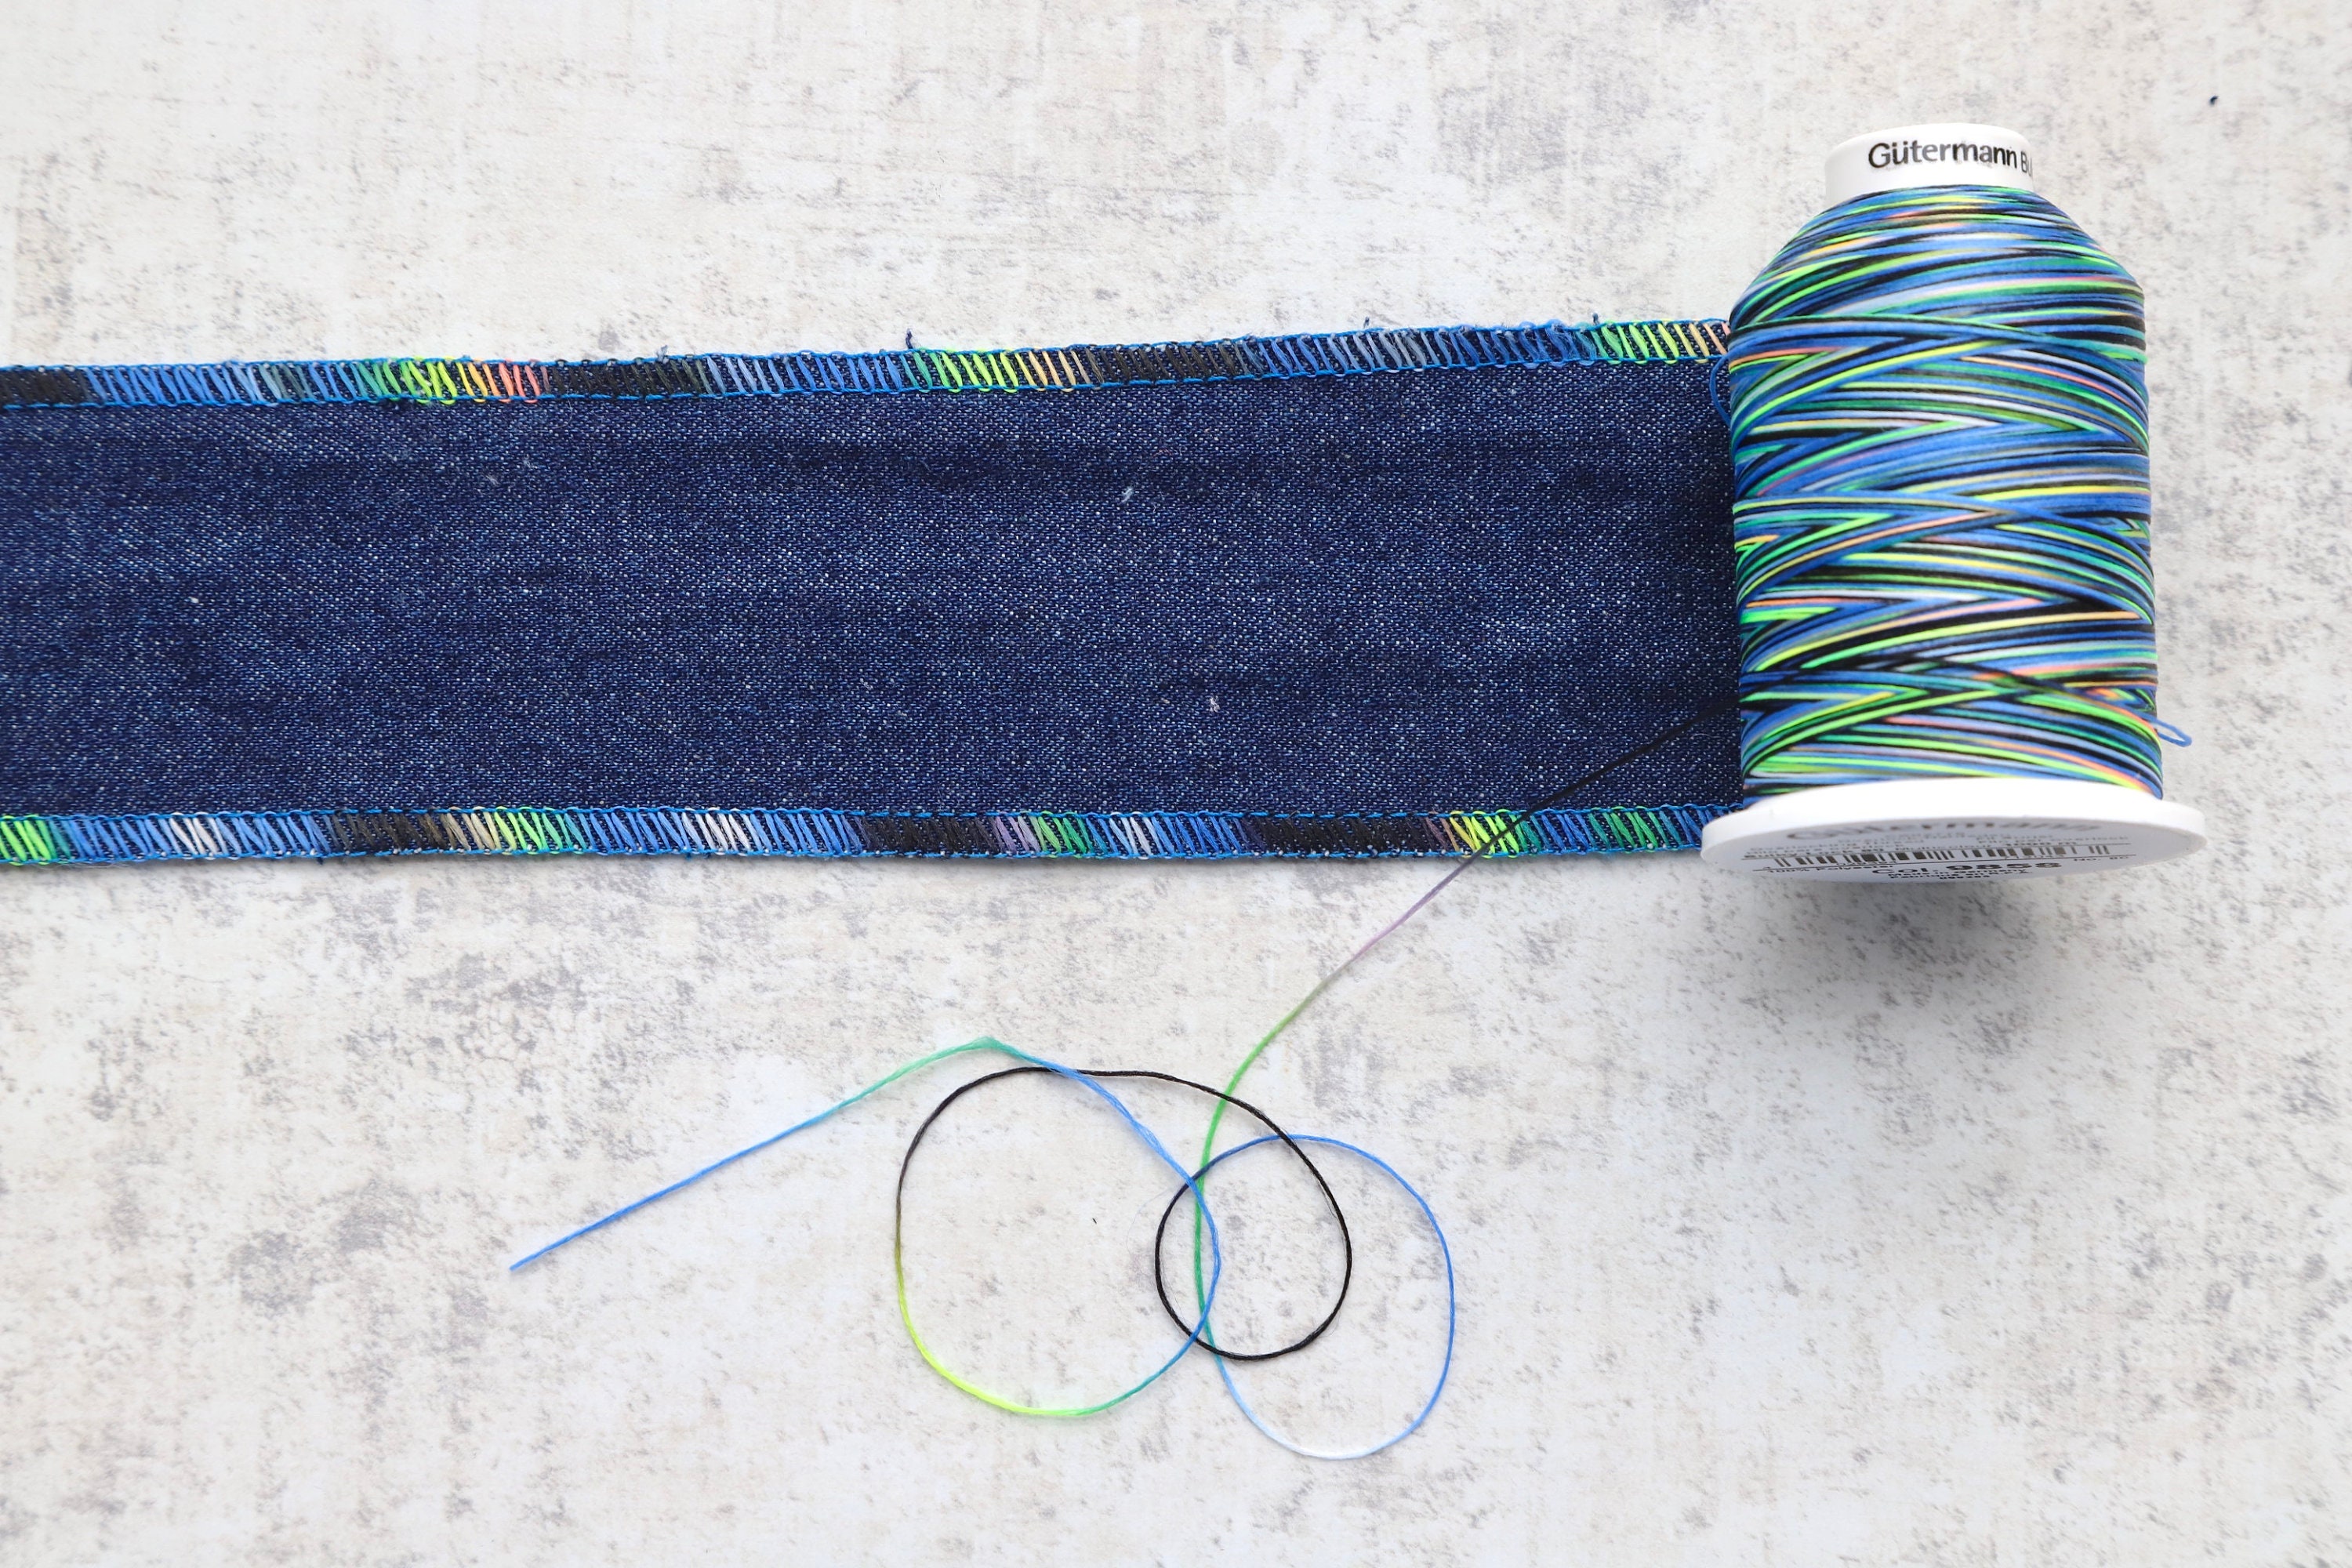 Gutermann Sewing Thread 326 Color 100 Meters Knit Yarn 1 Pcs Overlock,  Polyester, Hemming, Machine, Hand, Buttons, Fine Ornamental Stitches,  Decorative, Needles, Original Brand, Spools, 788988 Diy, - AliExpress